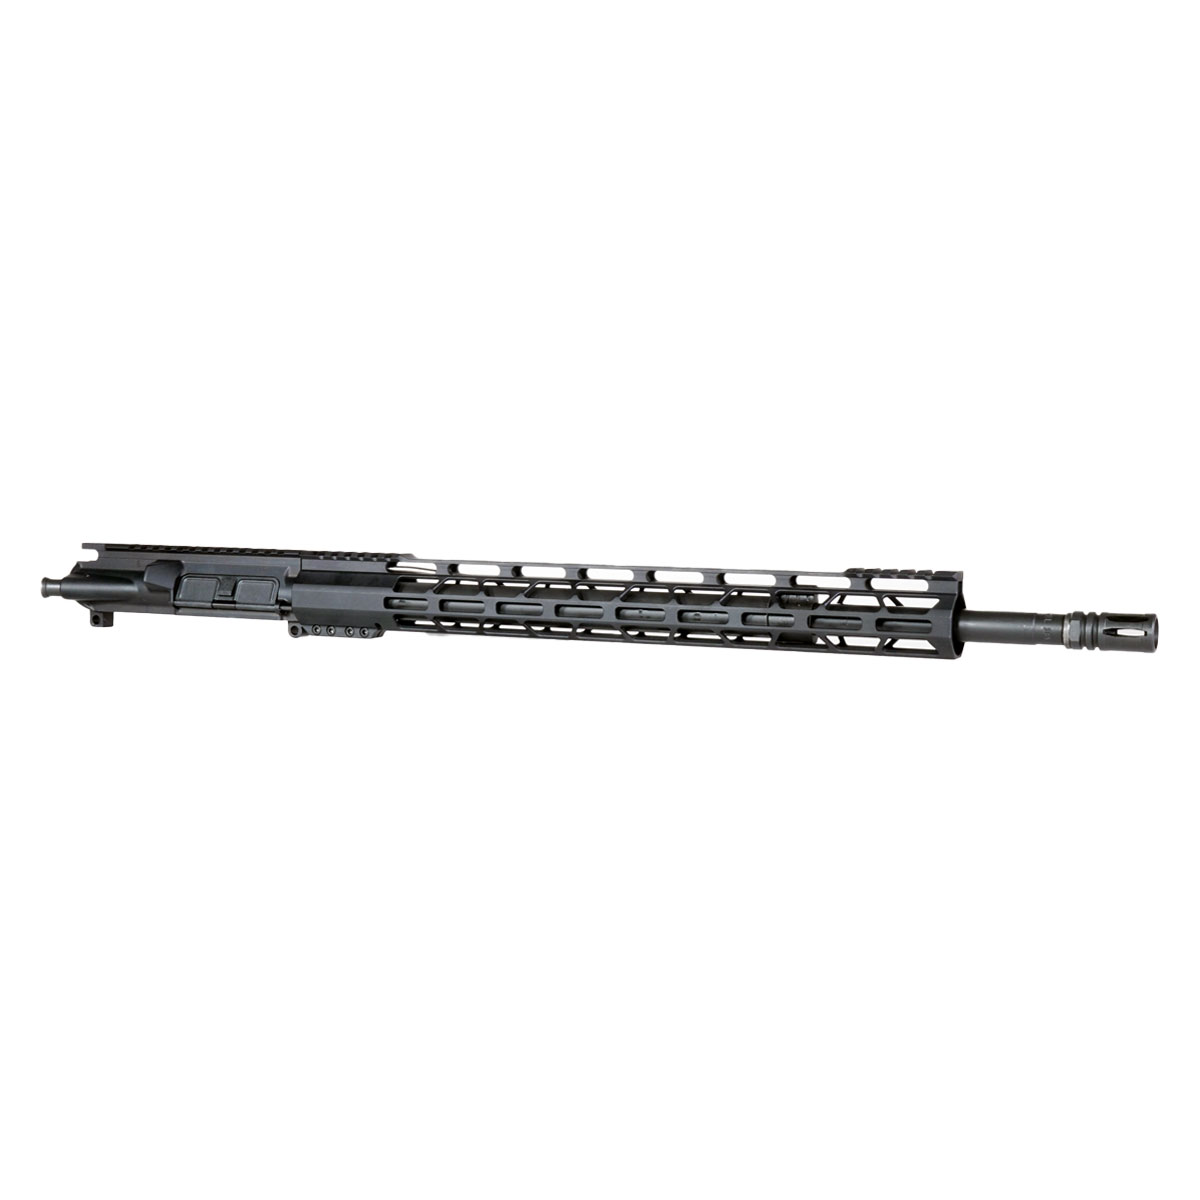 DDS 'Lead Slinger' 20-inch AR-15 6.5 Grendel Phosphate  Rifle Upper Build Kit